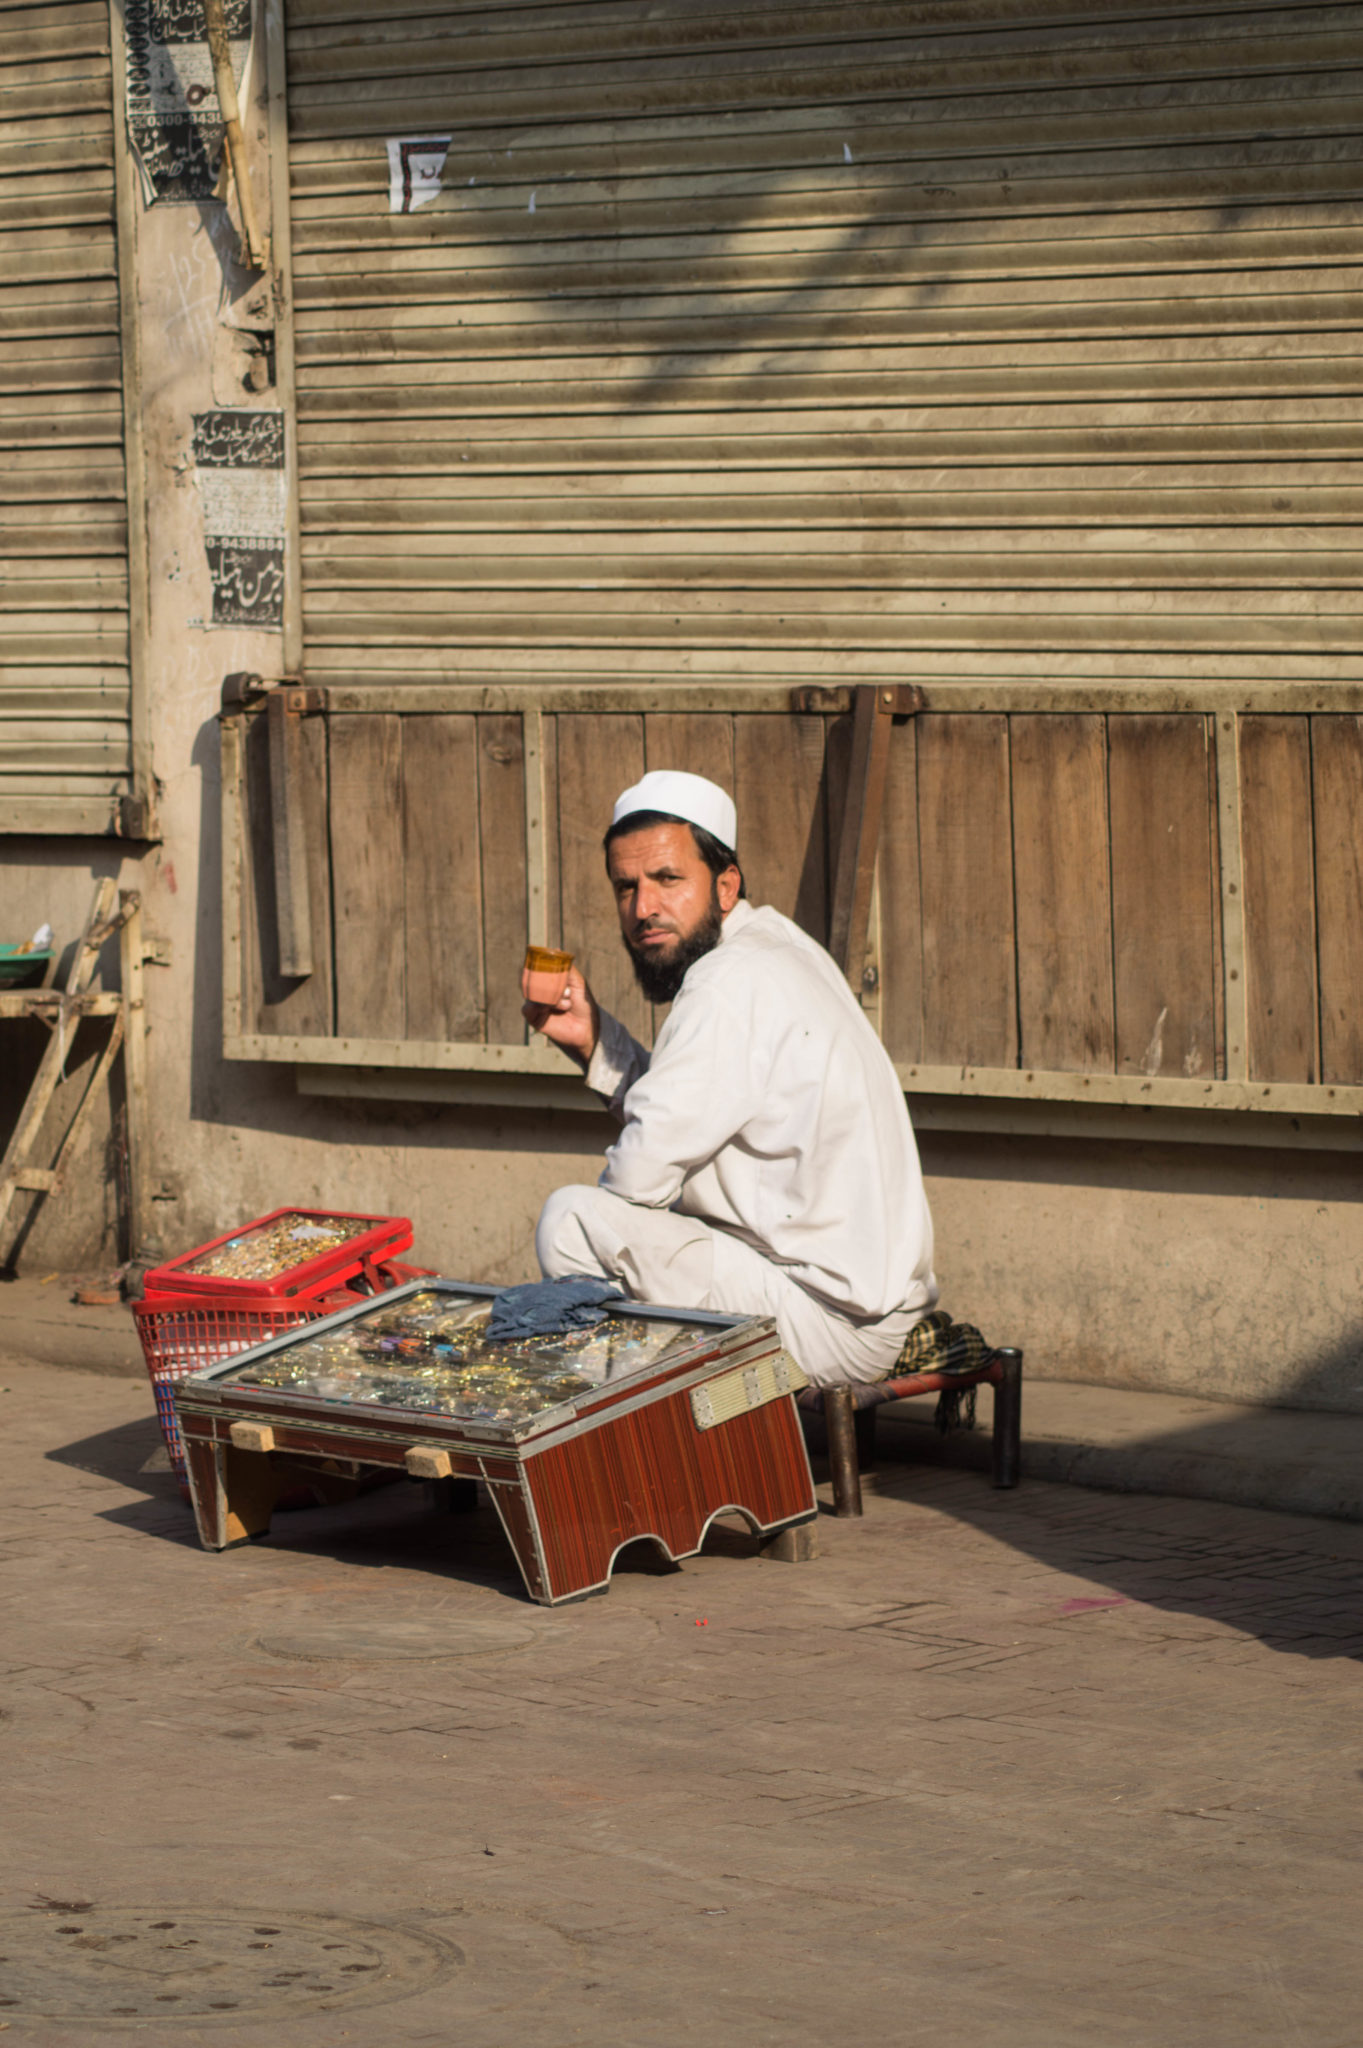 Walled City Lahore: Spaziergang durch die Lahore Sehenswürdigkeiten